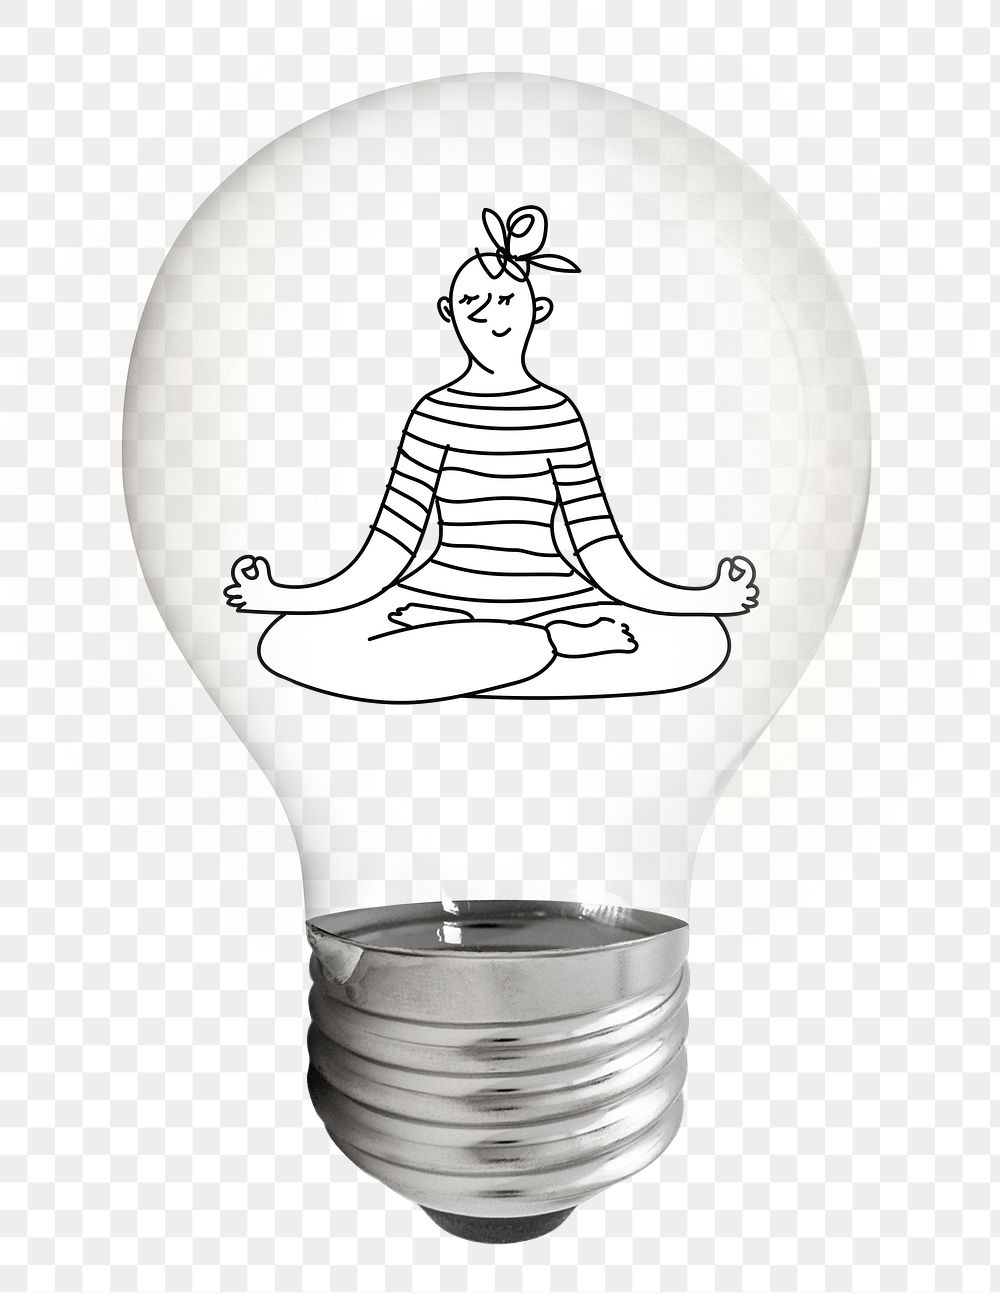 Woman meditating png doodle sticker, light bulb wellness creative illustration on transparent background